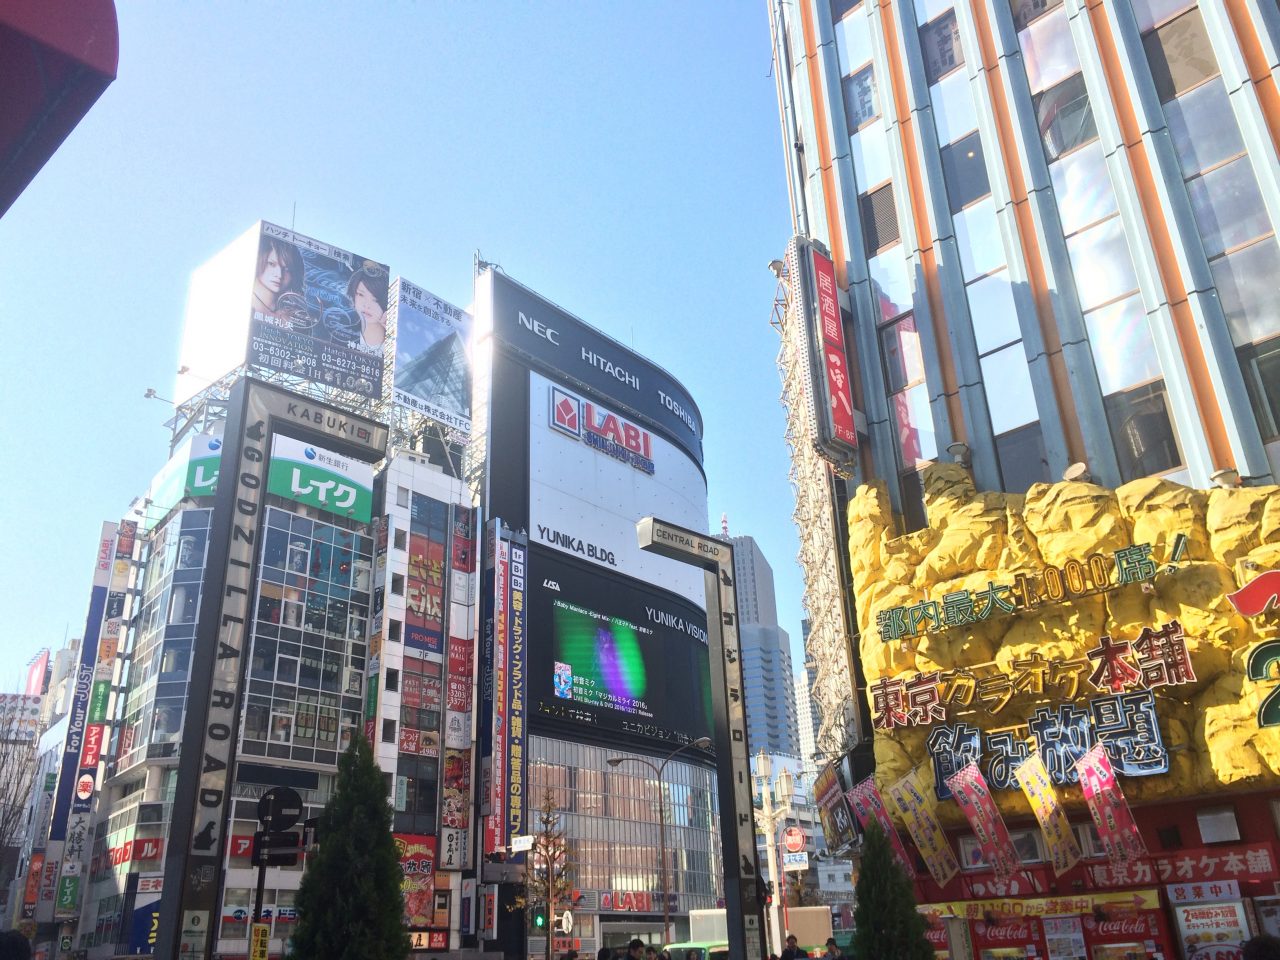 LABIと歌舞伎町の街並みの写真